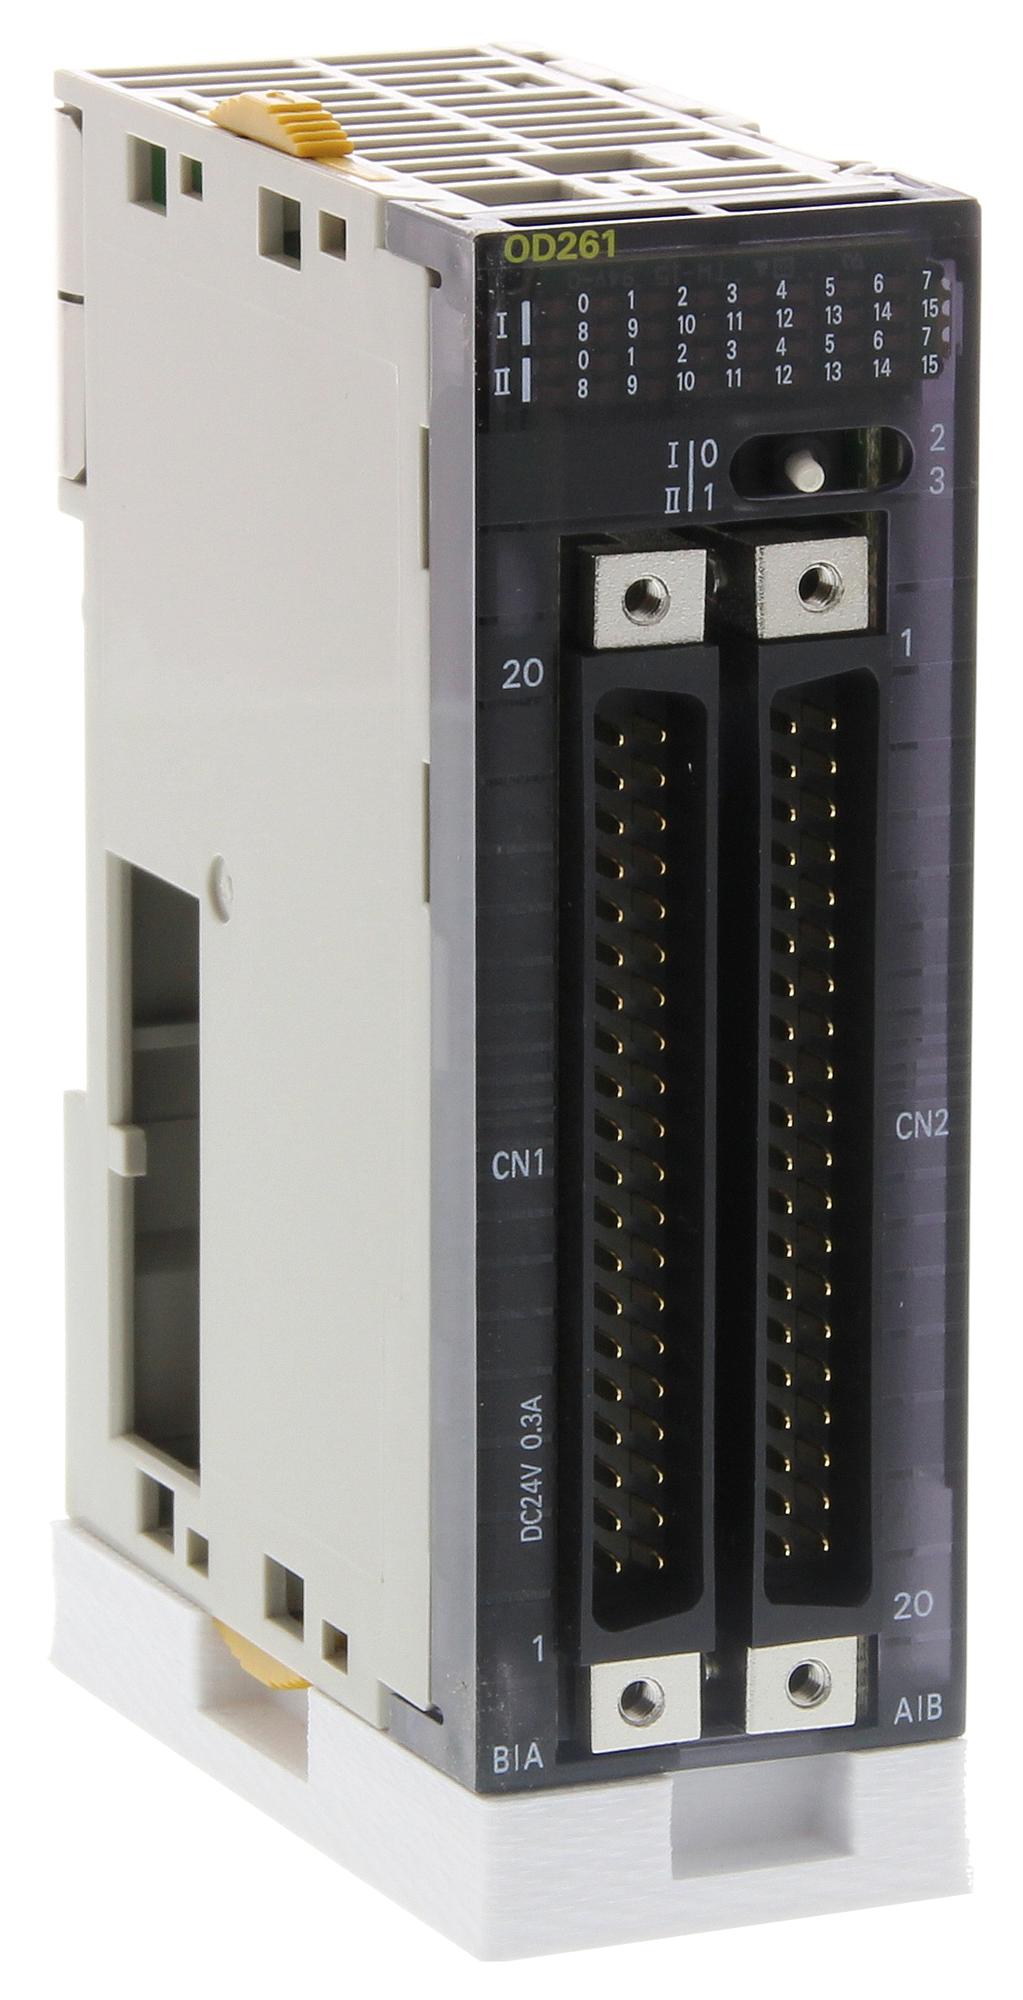 CJ1W-OD261 DIGITAL OUTPUT PLC CONTROLLERS OMRON